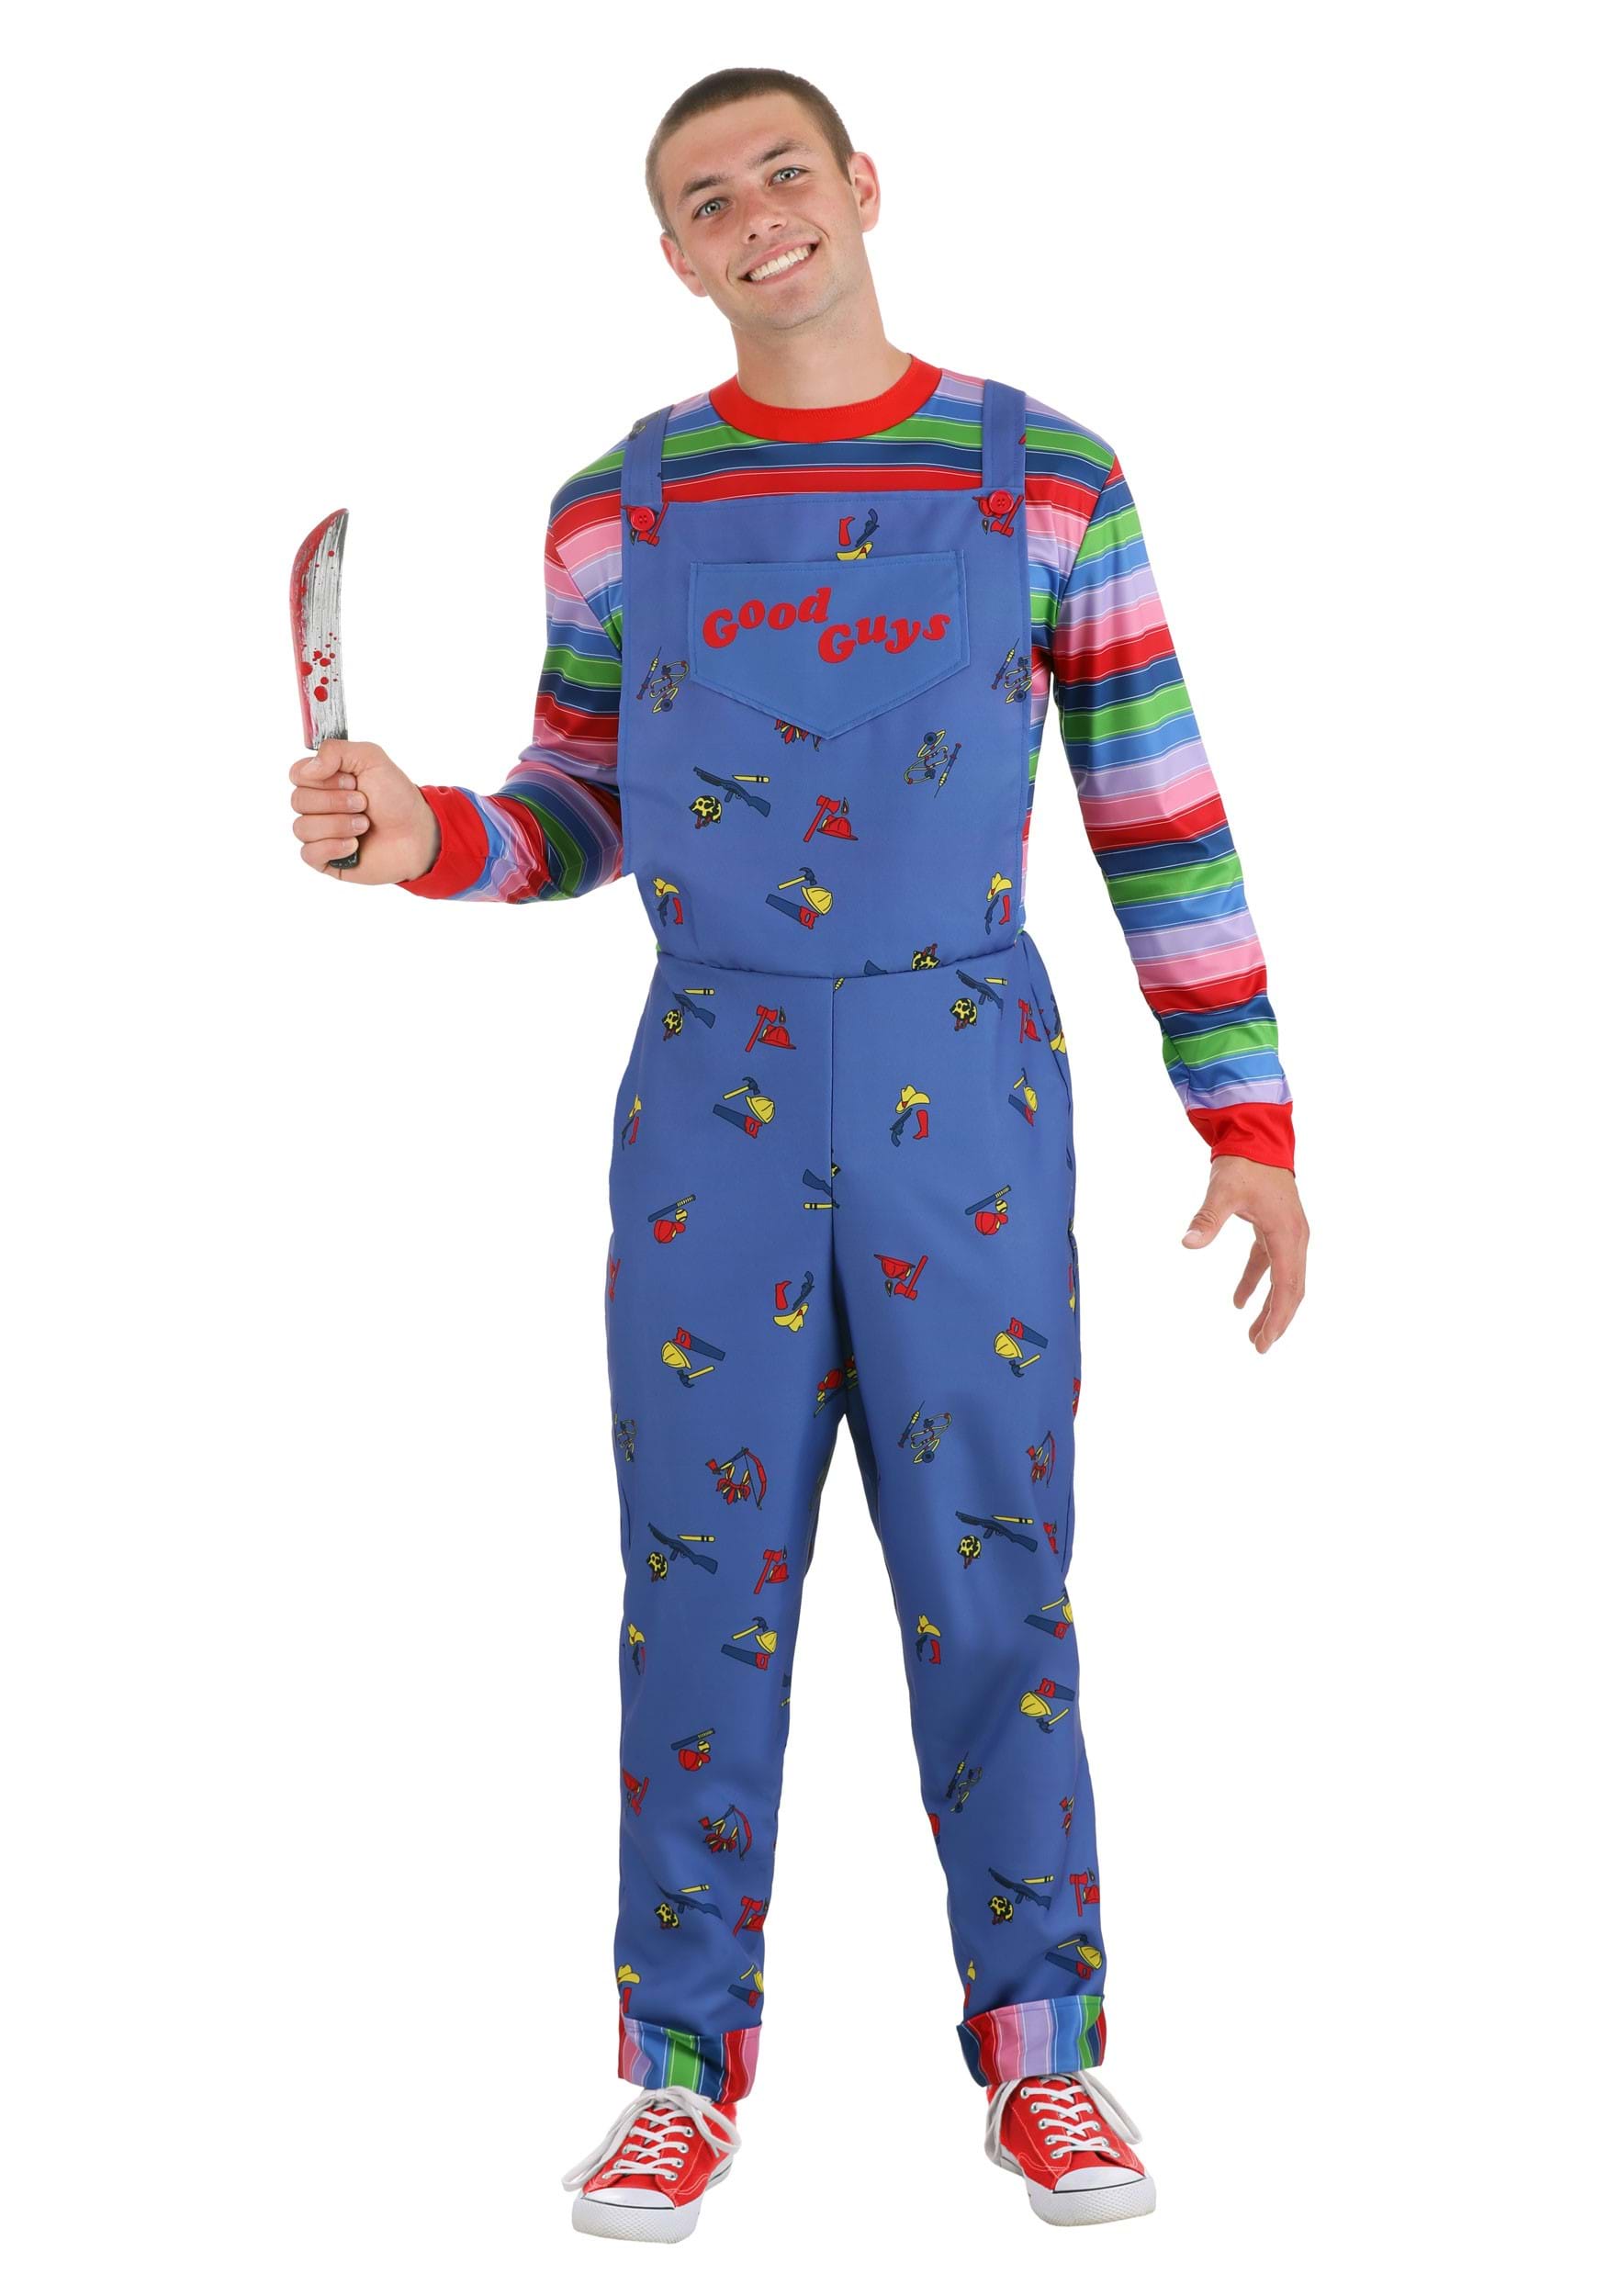 Men's Child's Play Chucky Costume